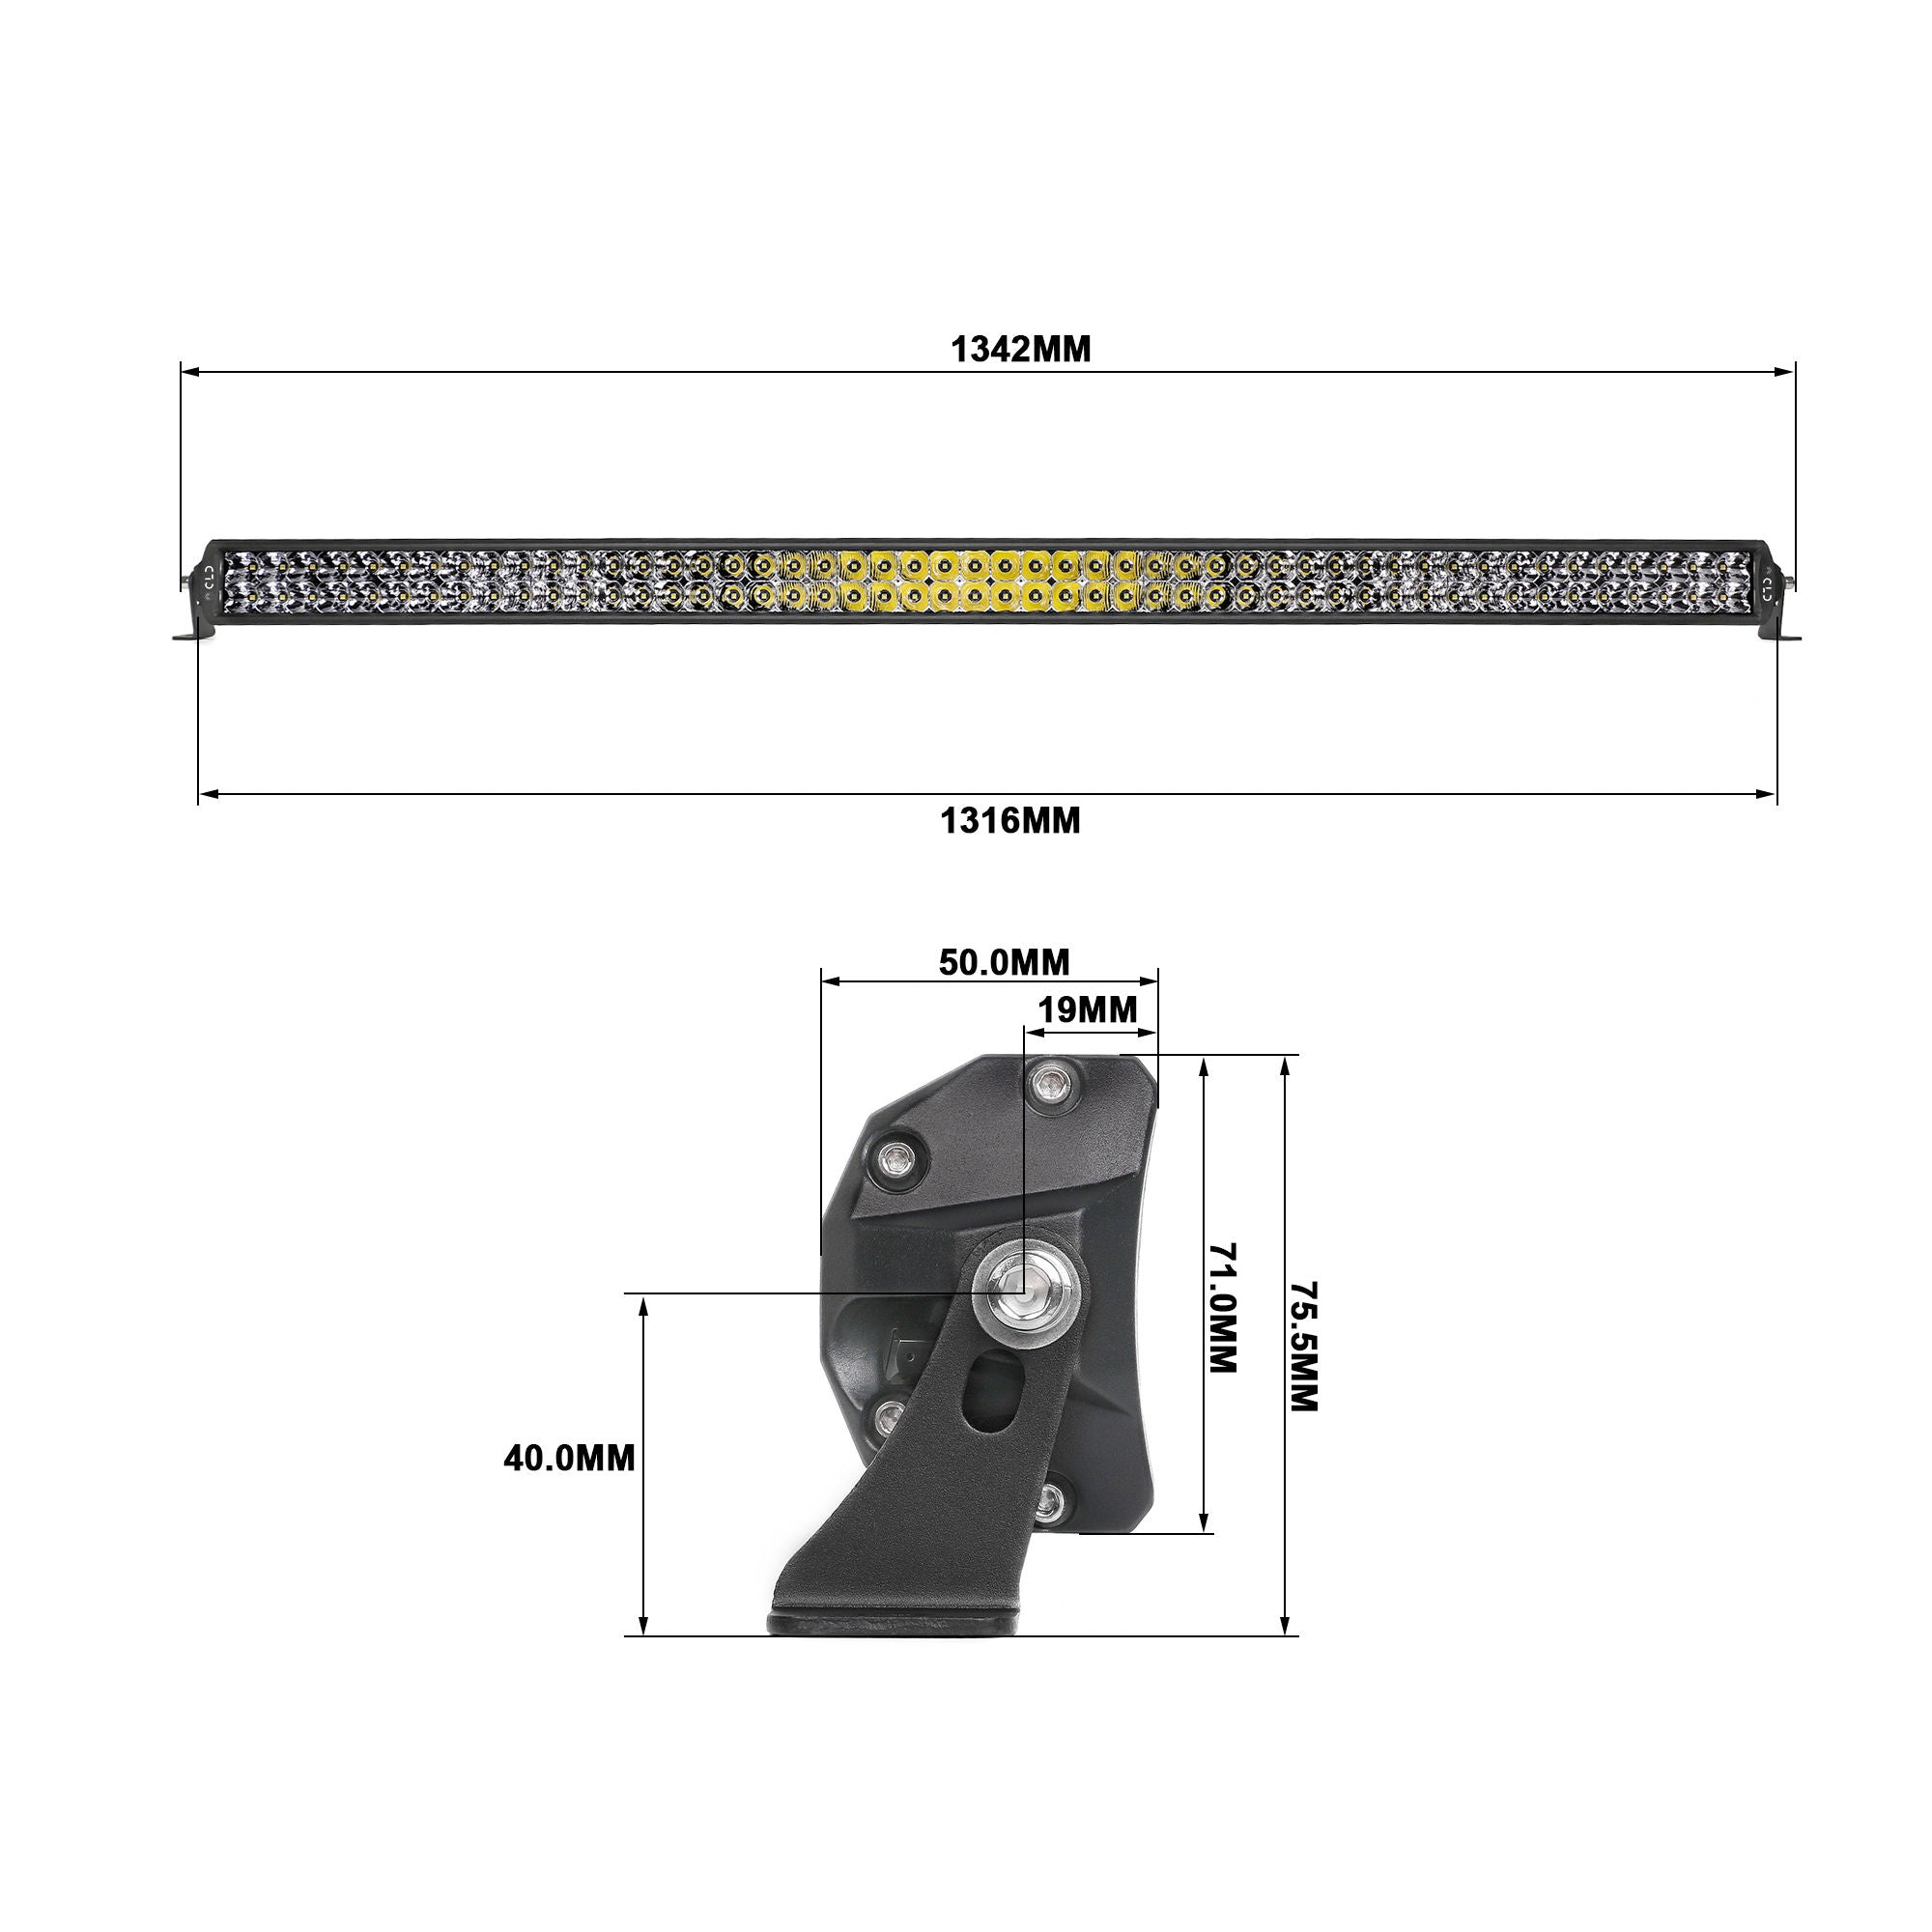 CLD CLDBAR50D - 50" Straight Dual Row Spot/Flood Combo Beam LED Light Bar - 18940 Lumens